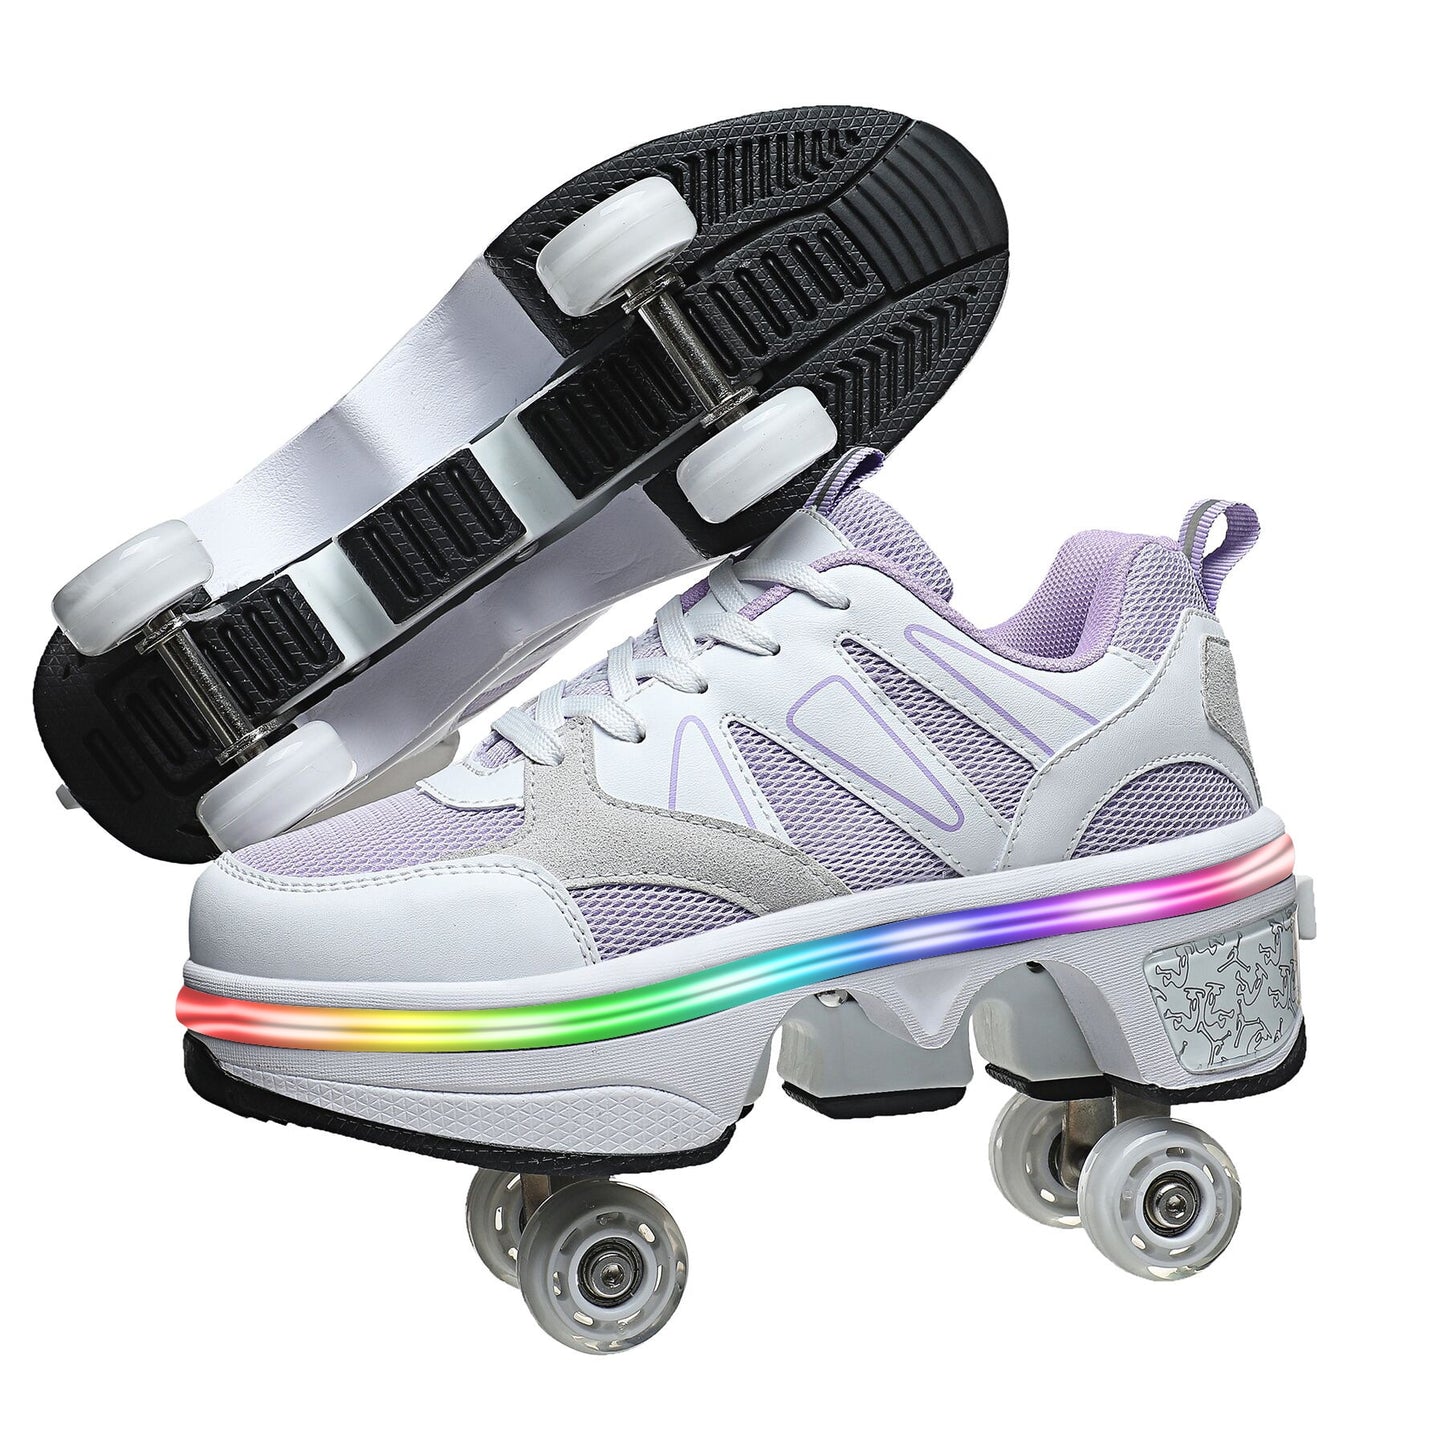 Dual-purpose Roller Skating Deformation Shoes